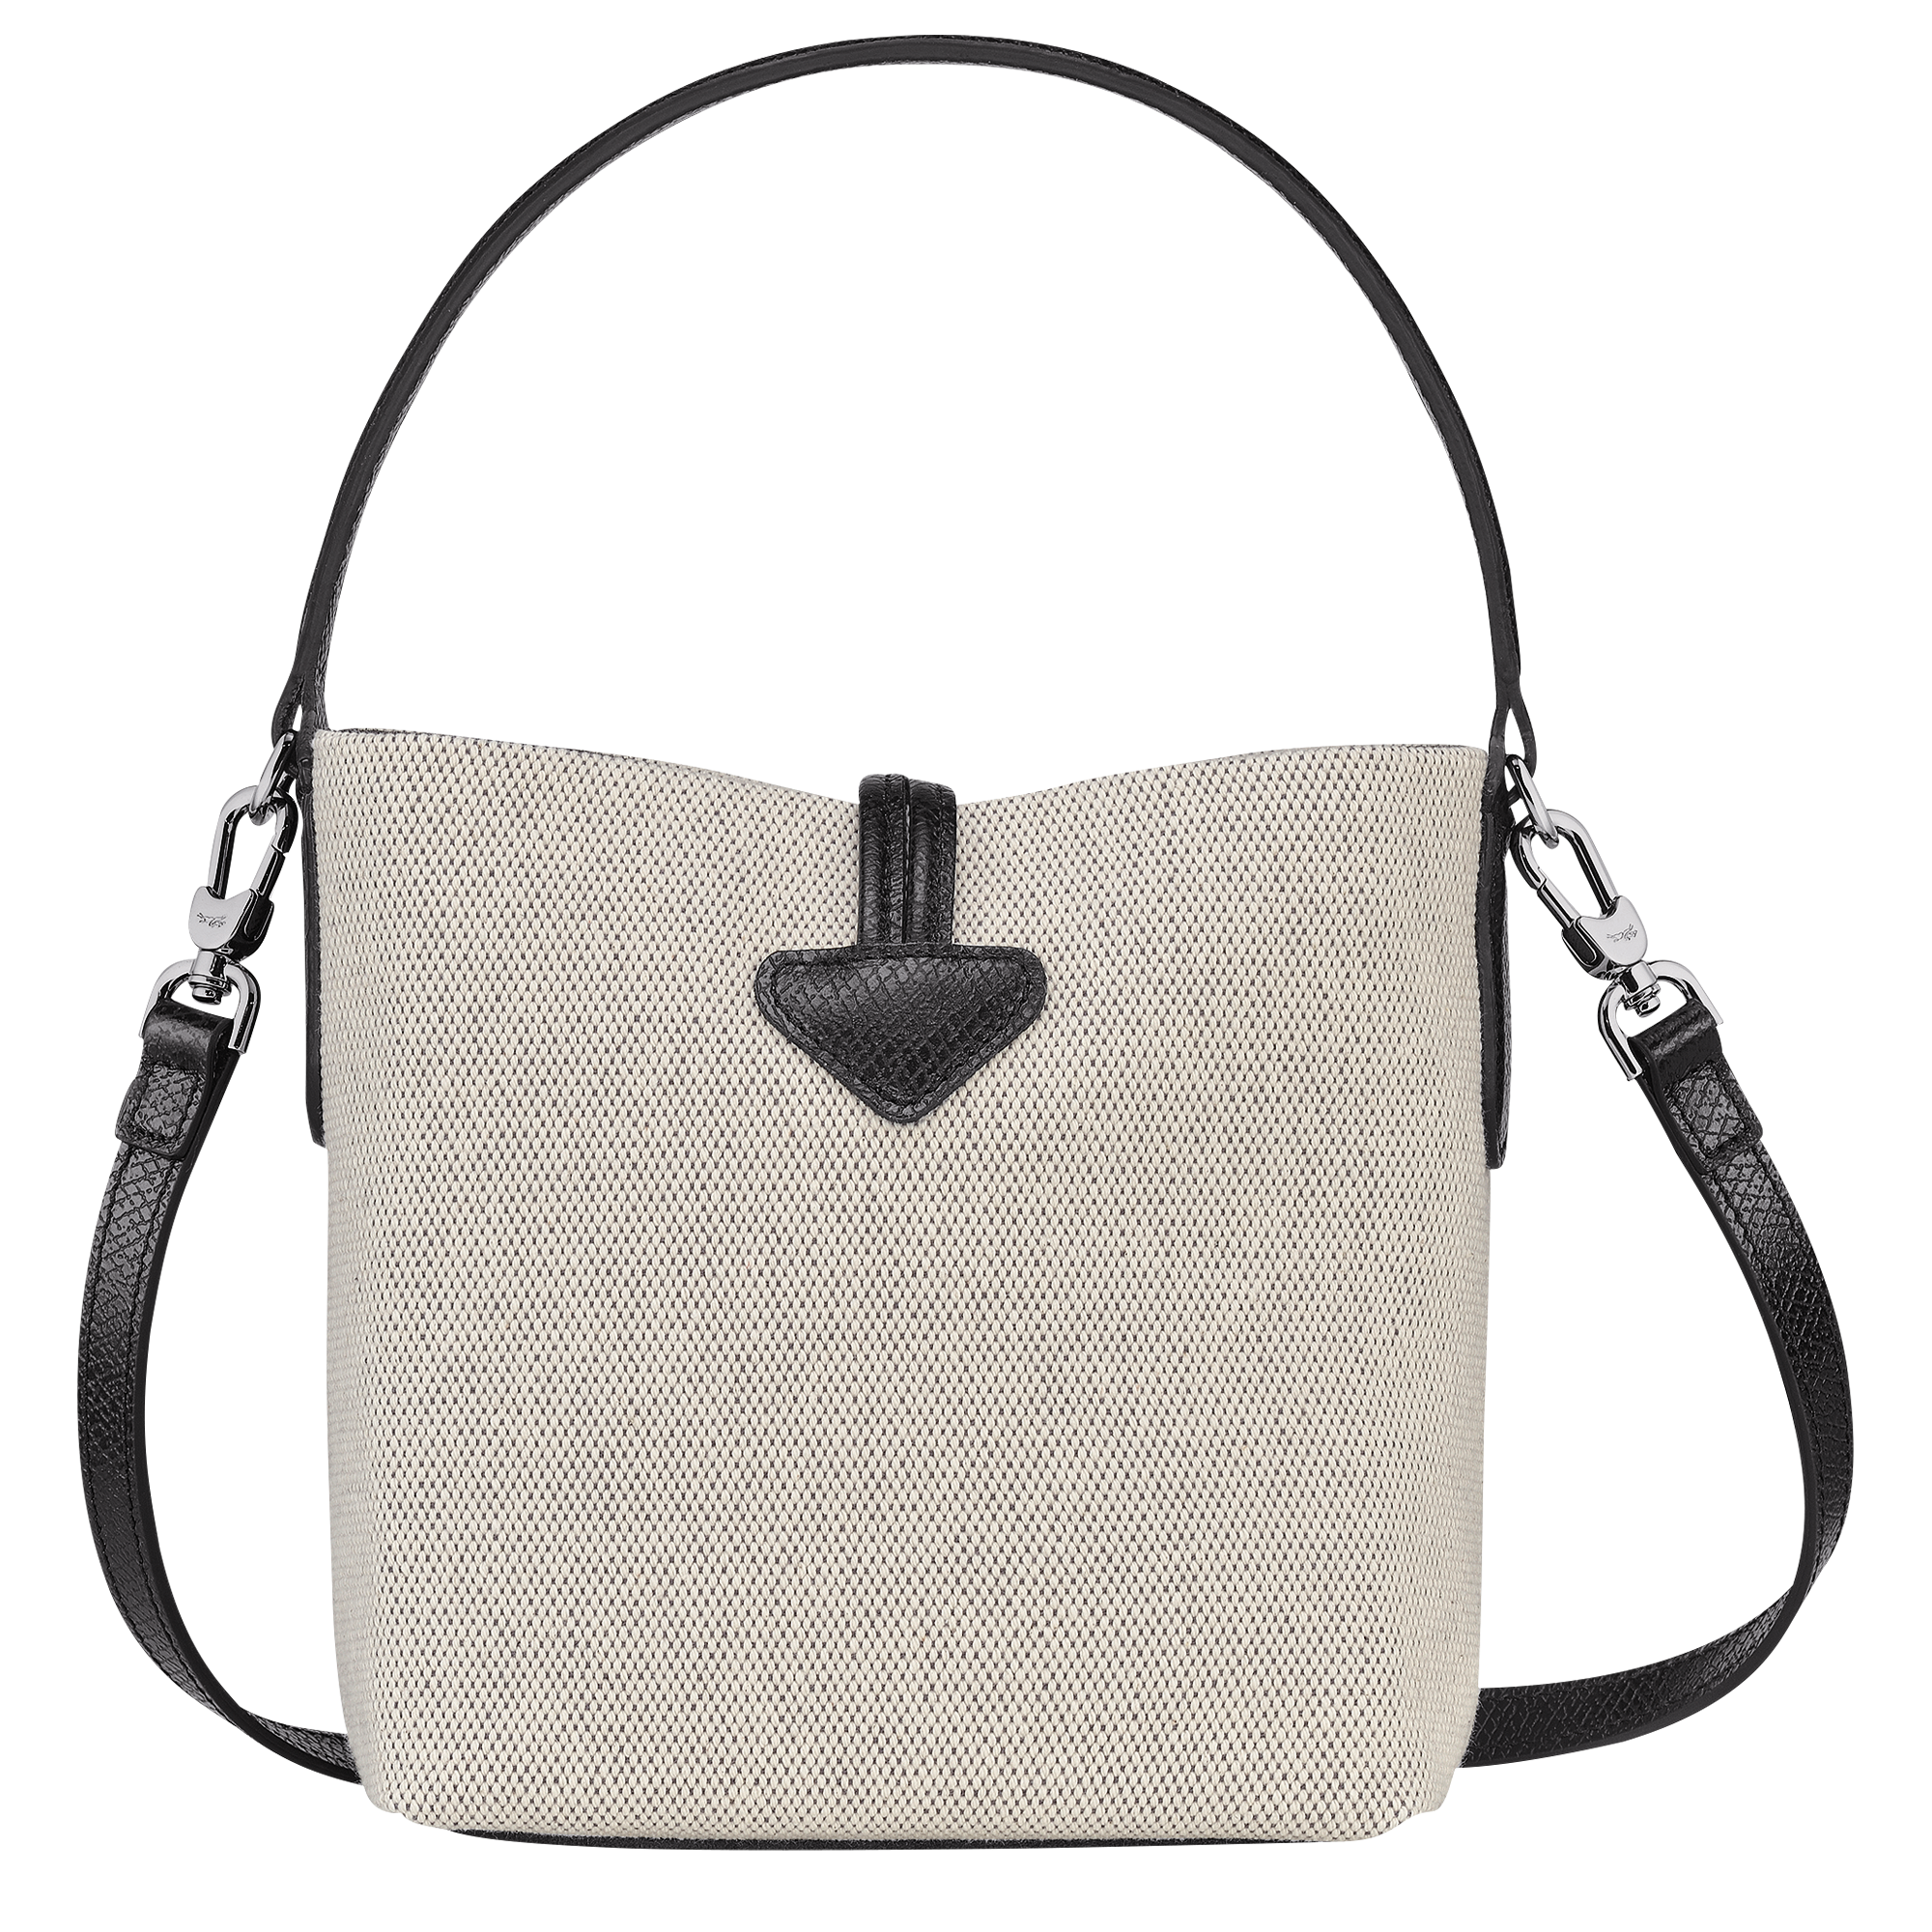 Epure S Bucket bag Natural - Canvas Epure XS 挎包€480.00 超值好货